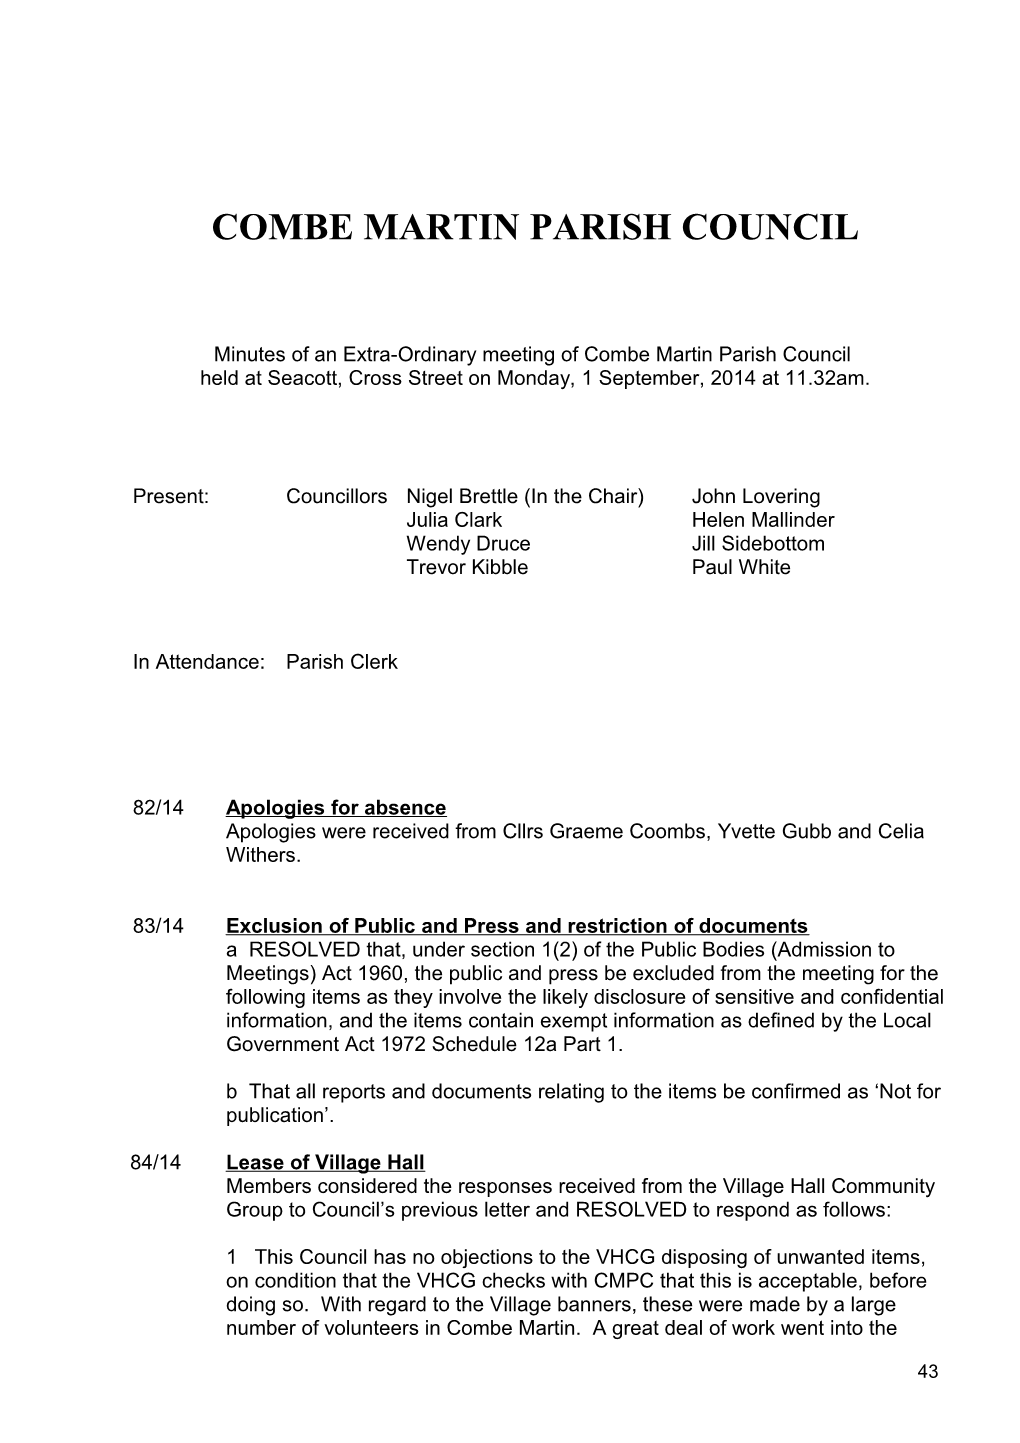 Combe Martin Parish Council s9